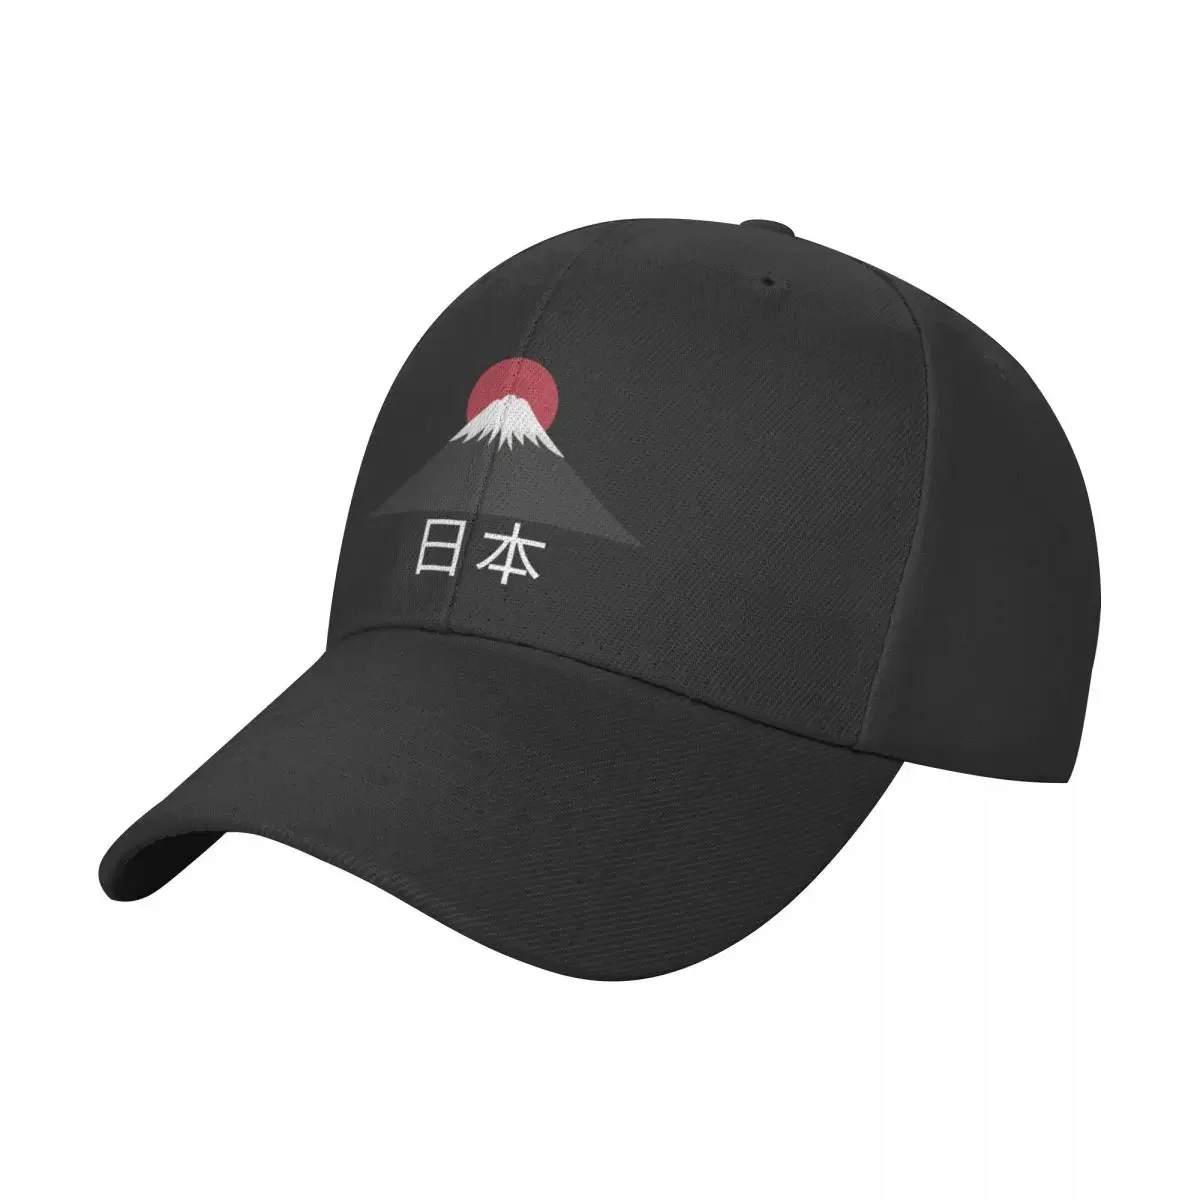 

Японская крутая бейсболка Fuji, забавная шапка Дерби, шляпа от солнца, Женская пляжная модная мужская